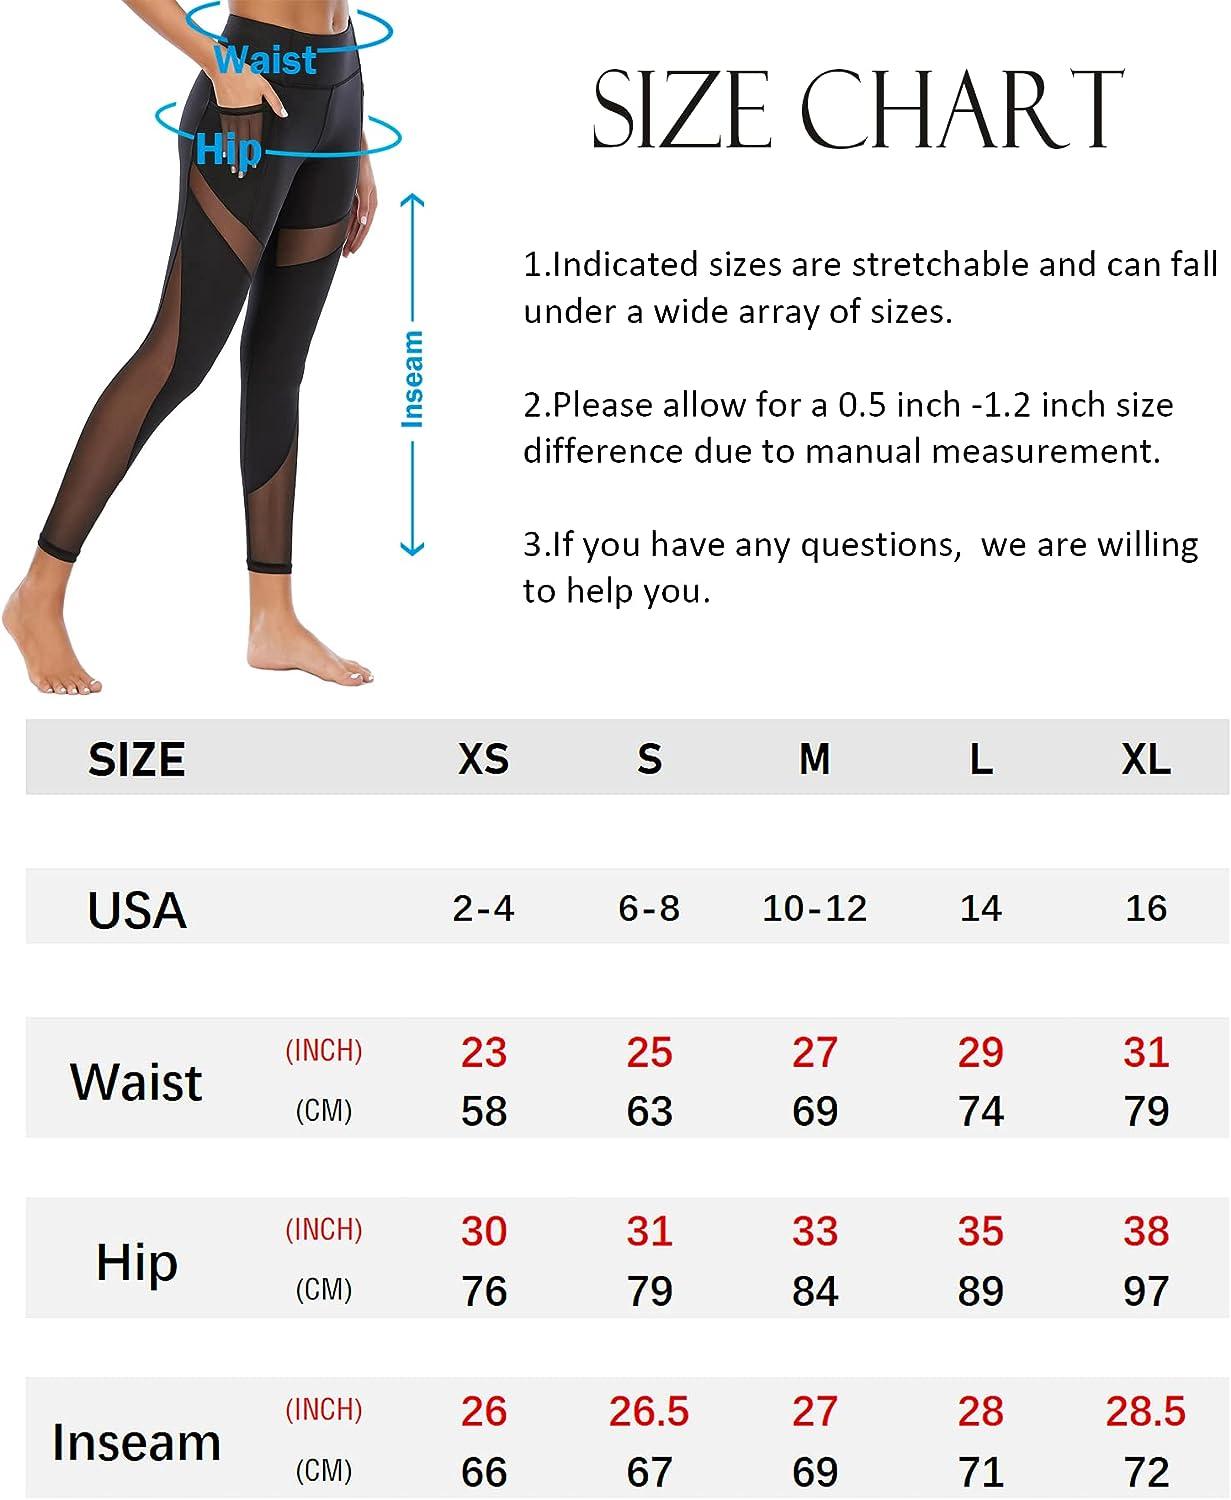 Hence Slim Fit Men Black Trousers - Buy Hence Slim Fit Men Black Trousers  Online at Best Prices in India | Flipkart.com